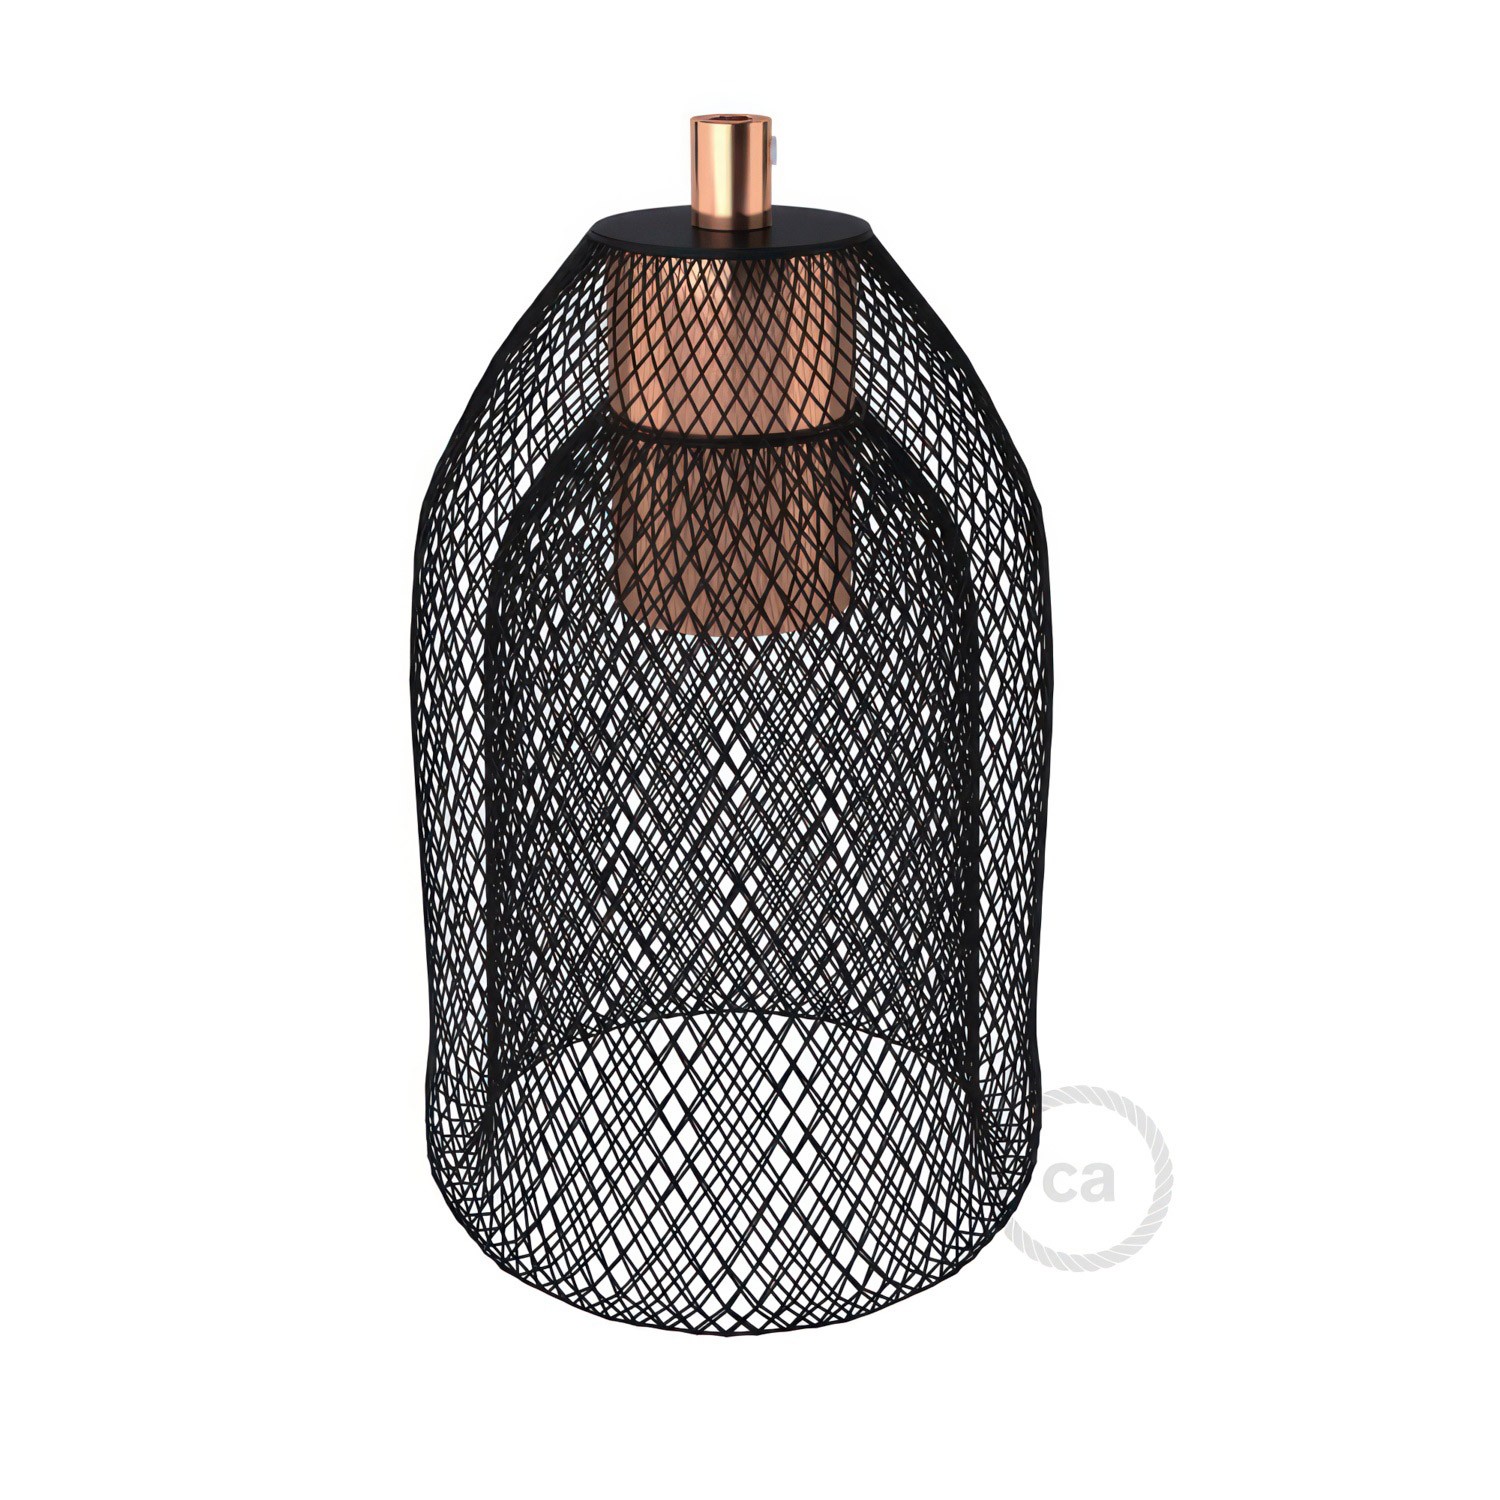 Lampenschirmkäfig Ghostbell aus Metall mit E27-Fassung